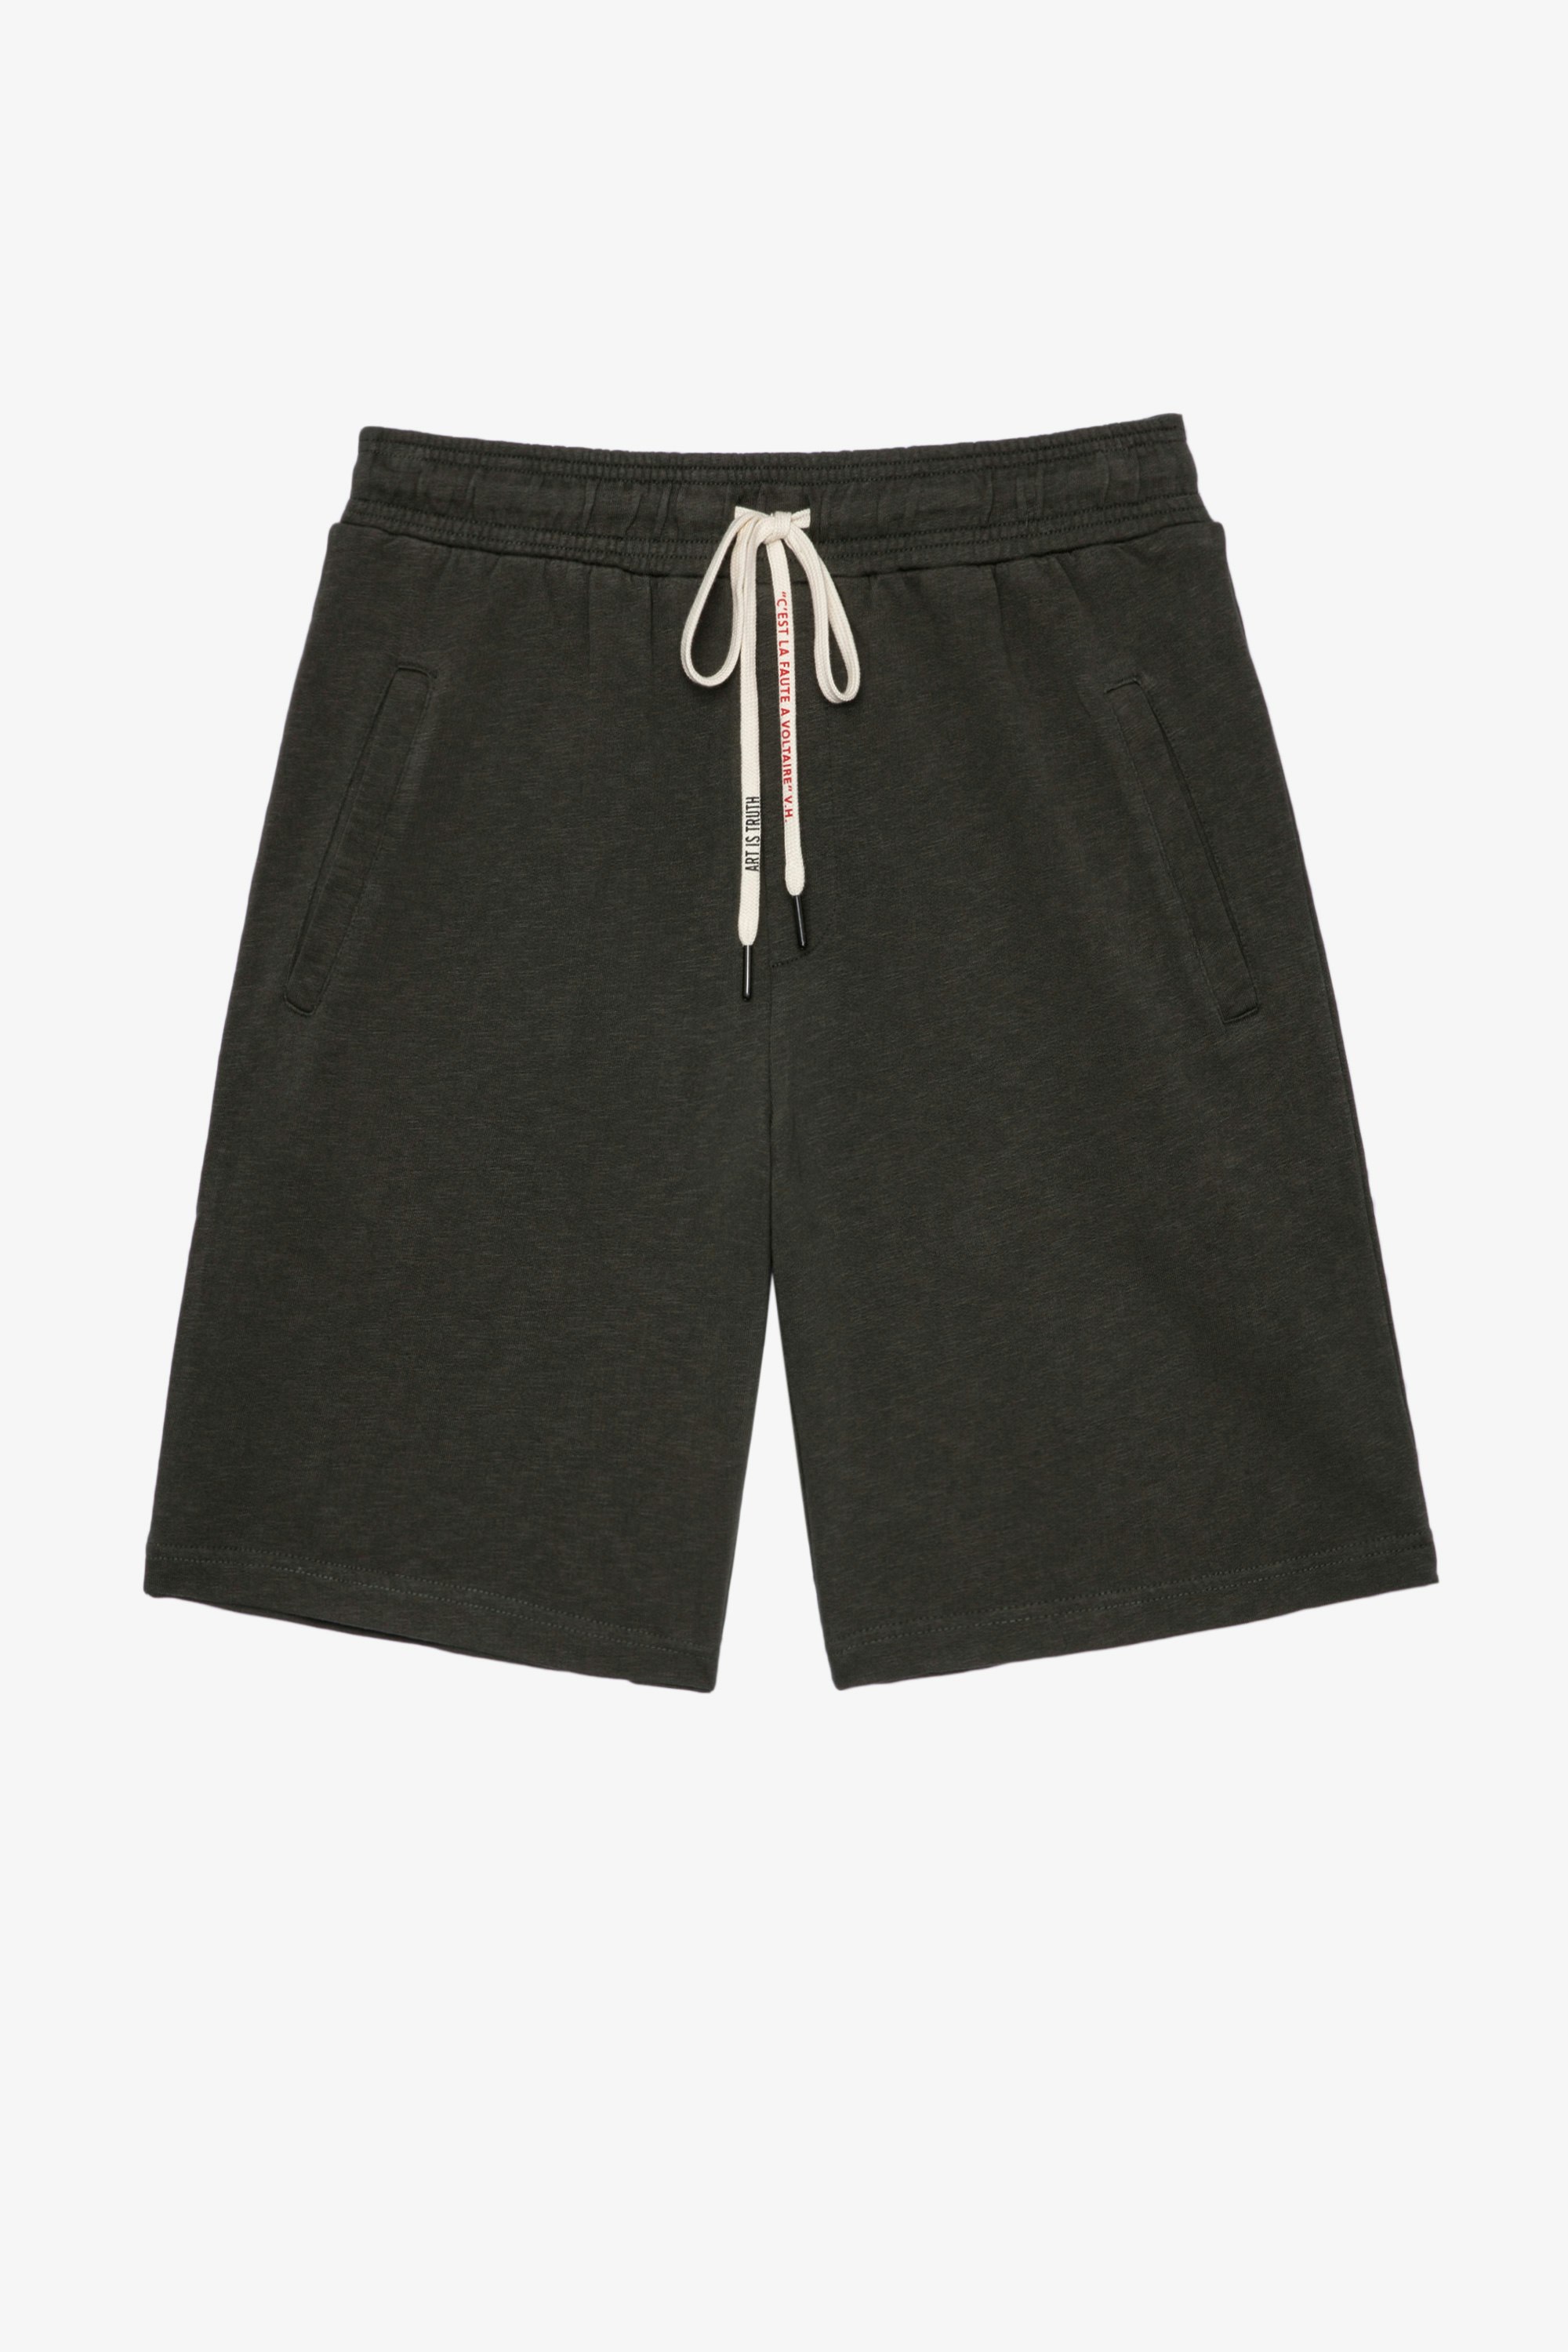 Party Shorts Men’s khaki cotton shorts